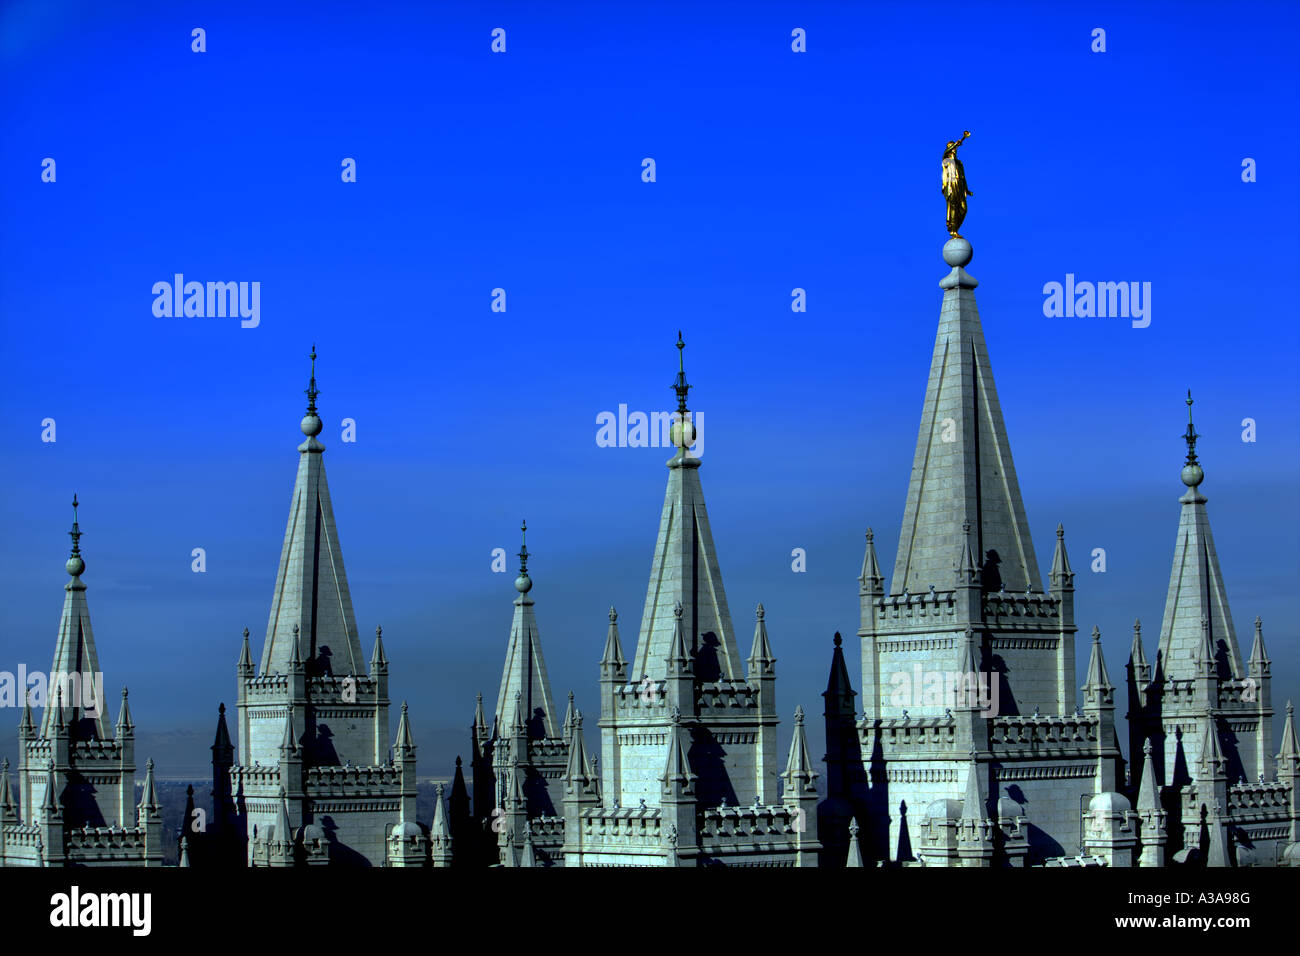 Salt Lake City Temple spires blue sky Stock Photo - Alamy